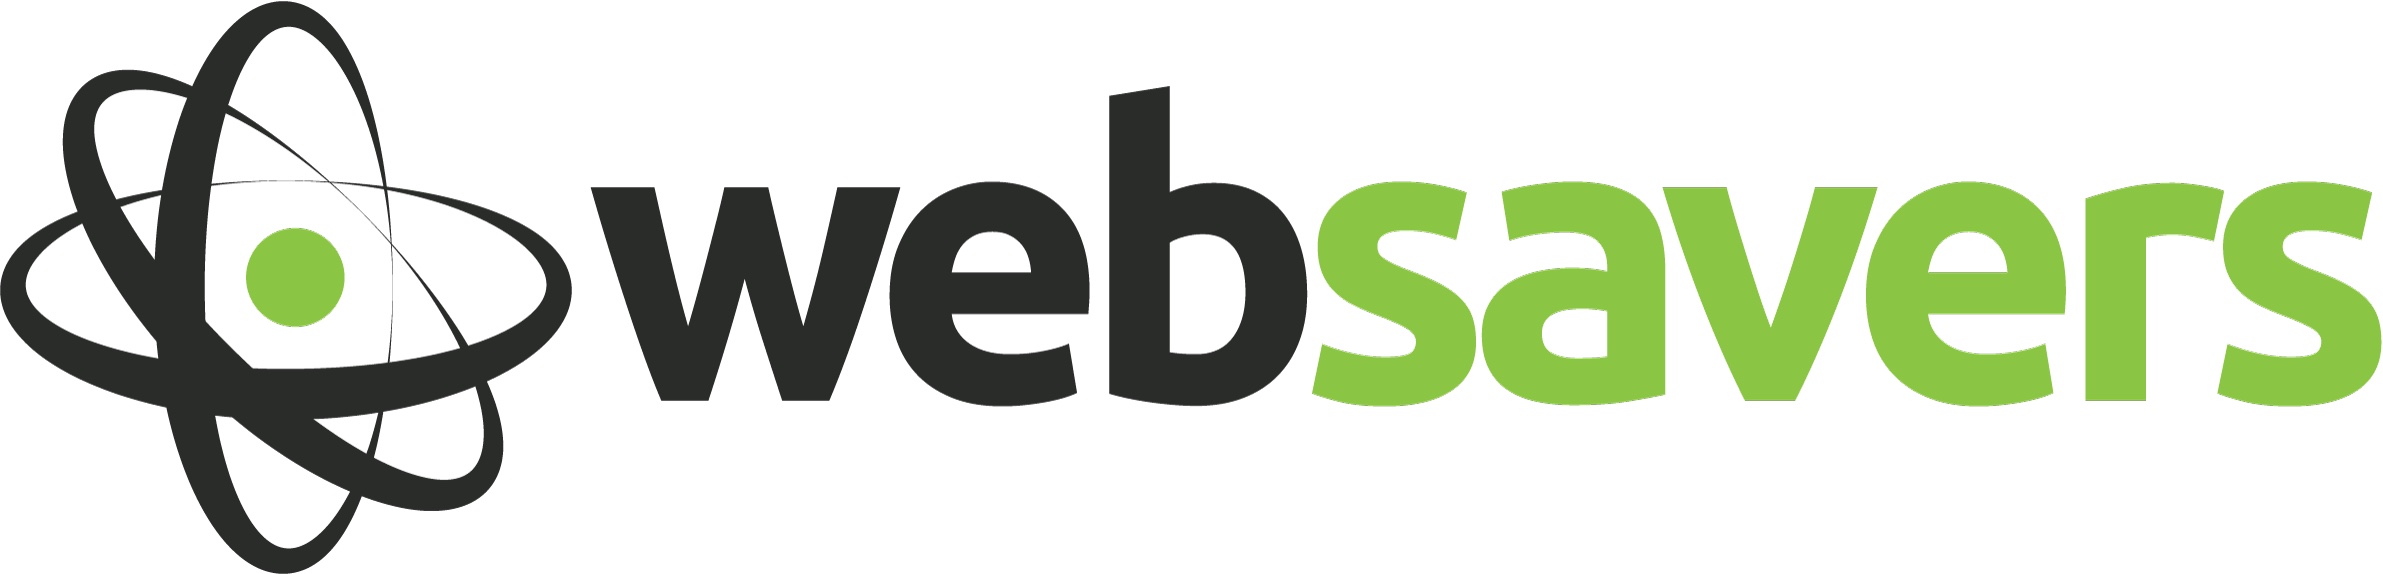 Websavers Inc.